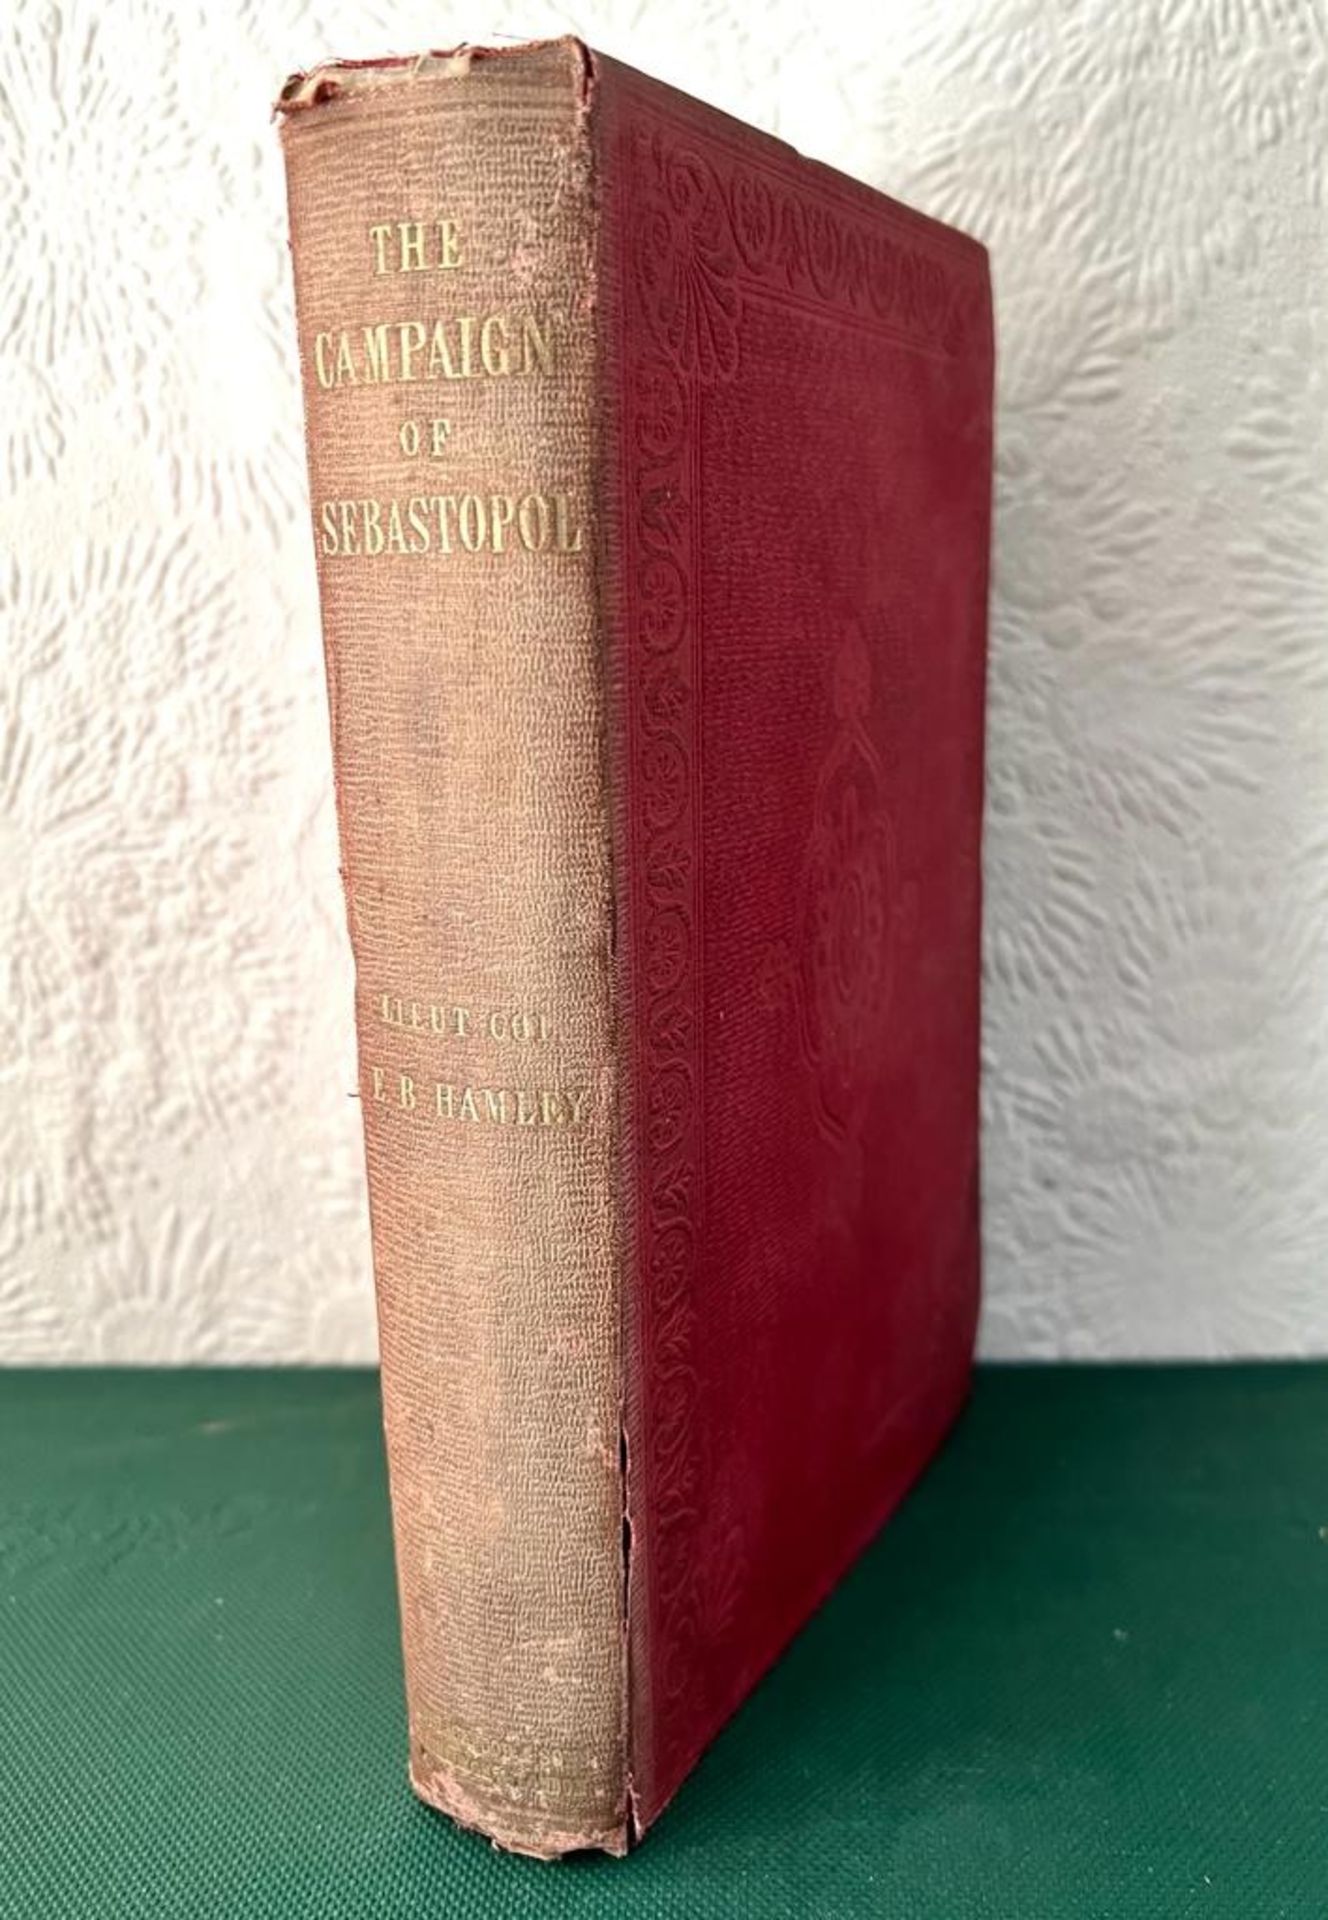 HAMLEY, EDWARD BRUCE, 'THE STORY OF THE CAMPAIGN OF SEBASTOPOL', 1855, CLOTH BACK